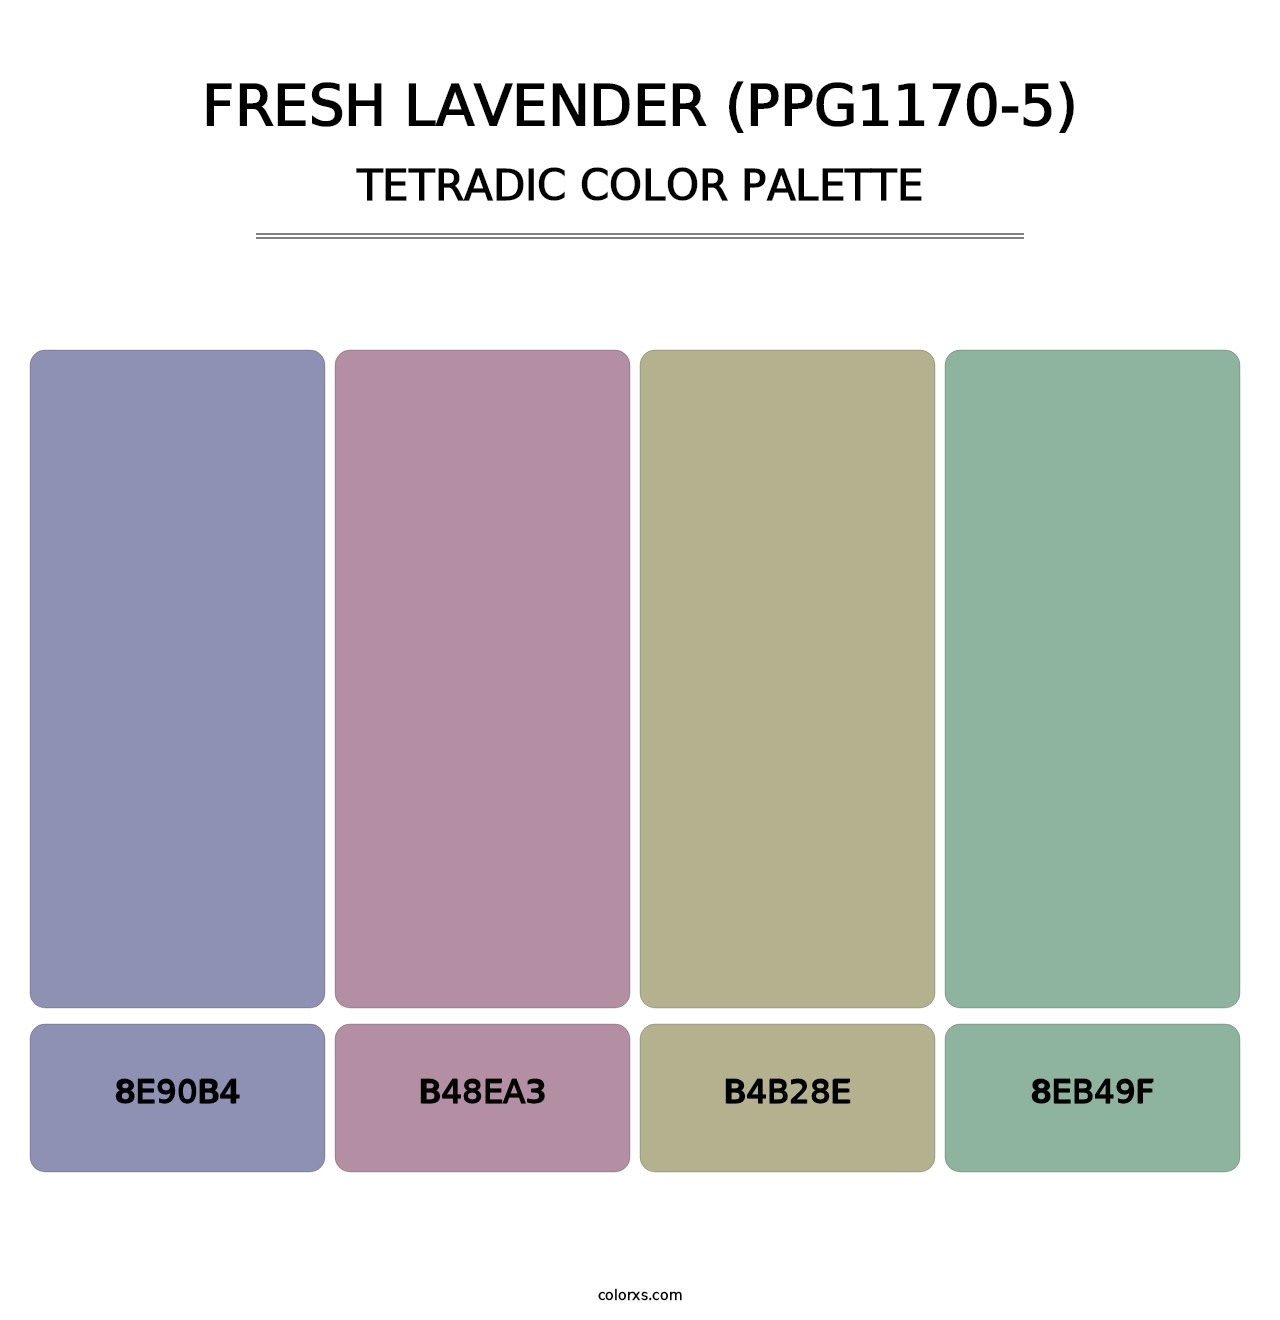 Fresh Lavender (PPG1170-5) - Tetradic Color Palette